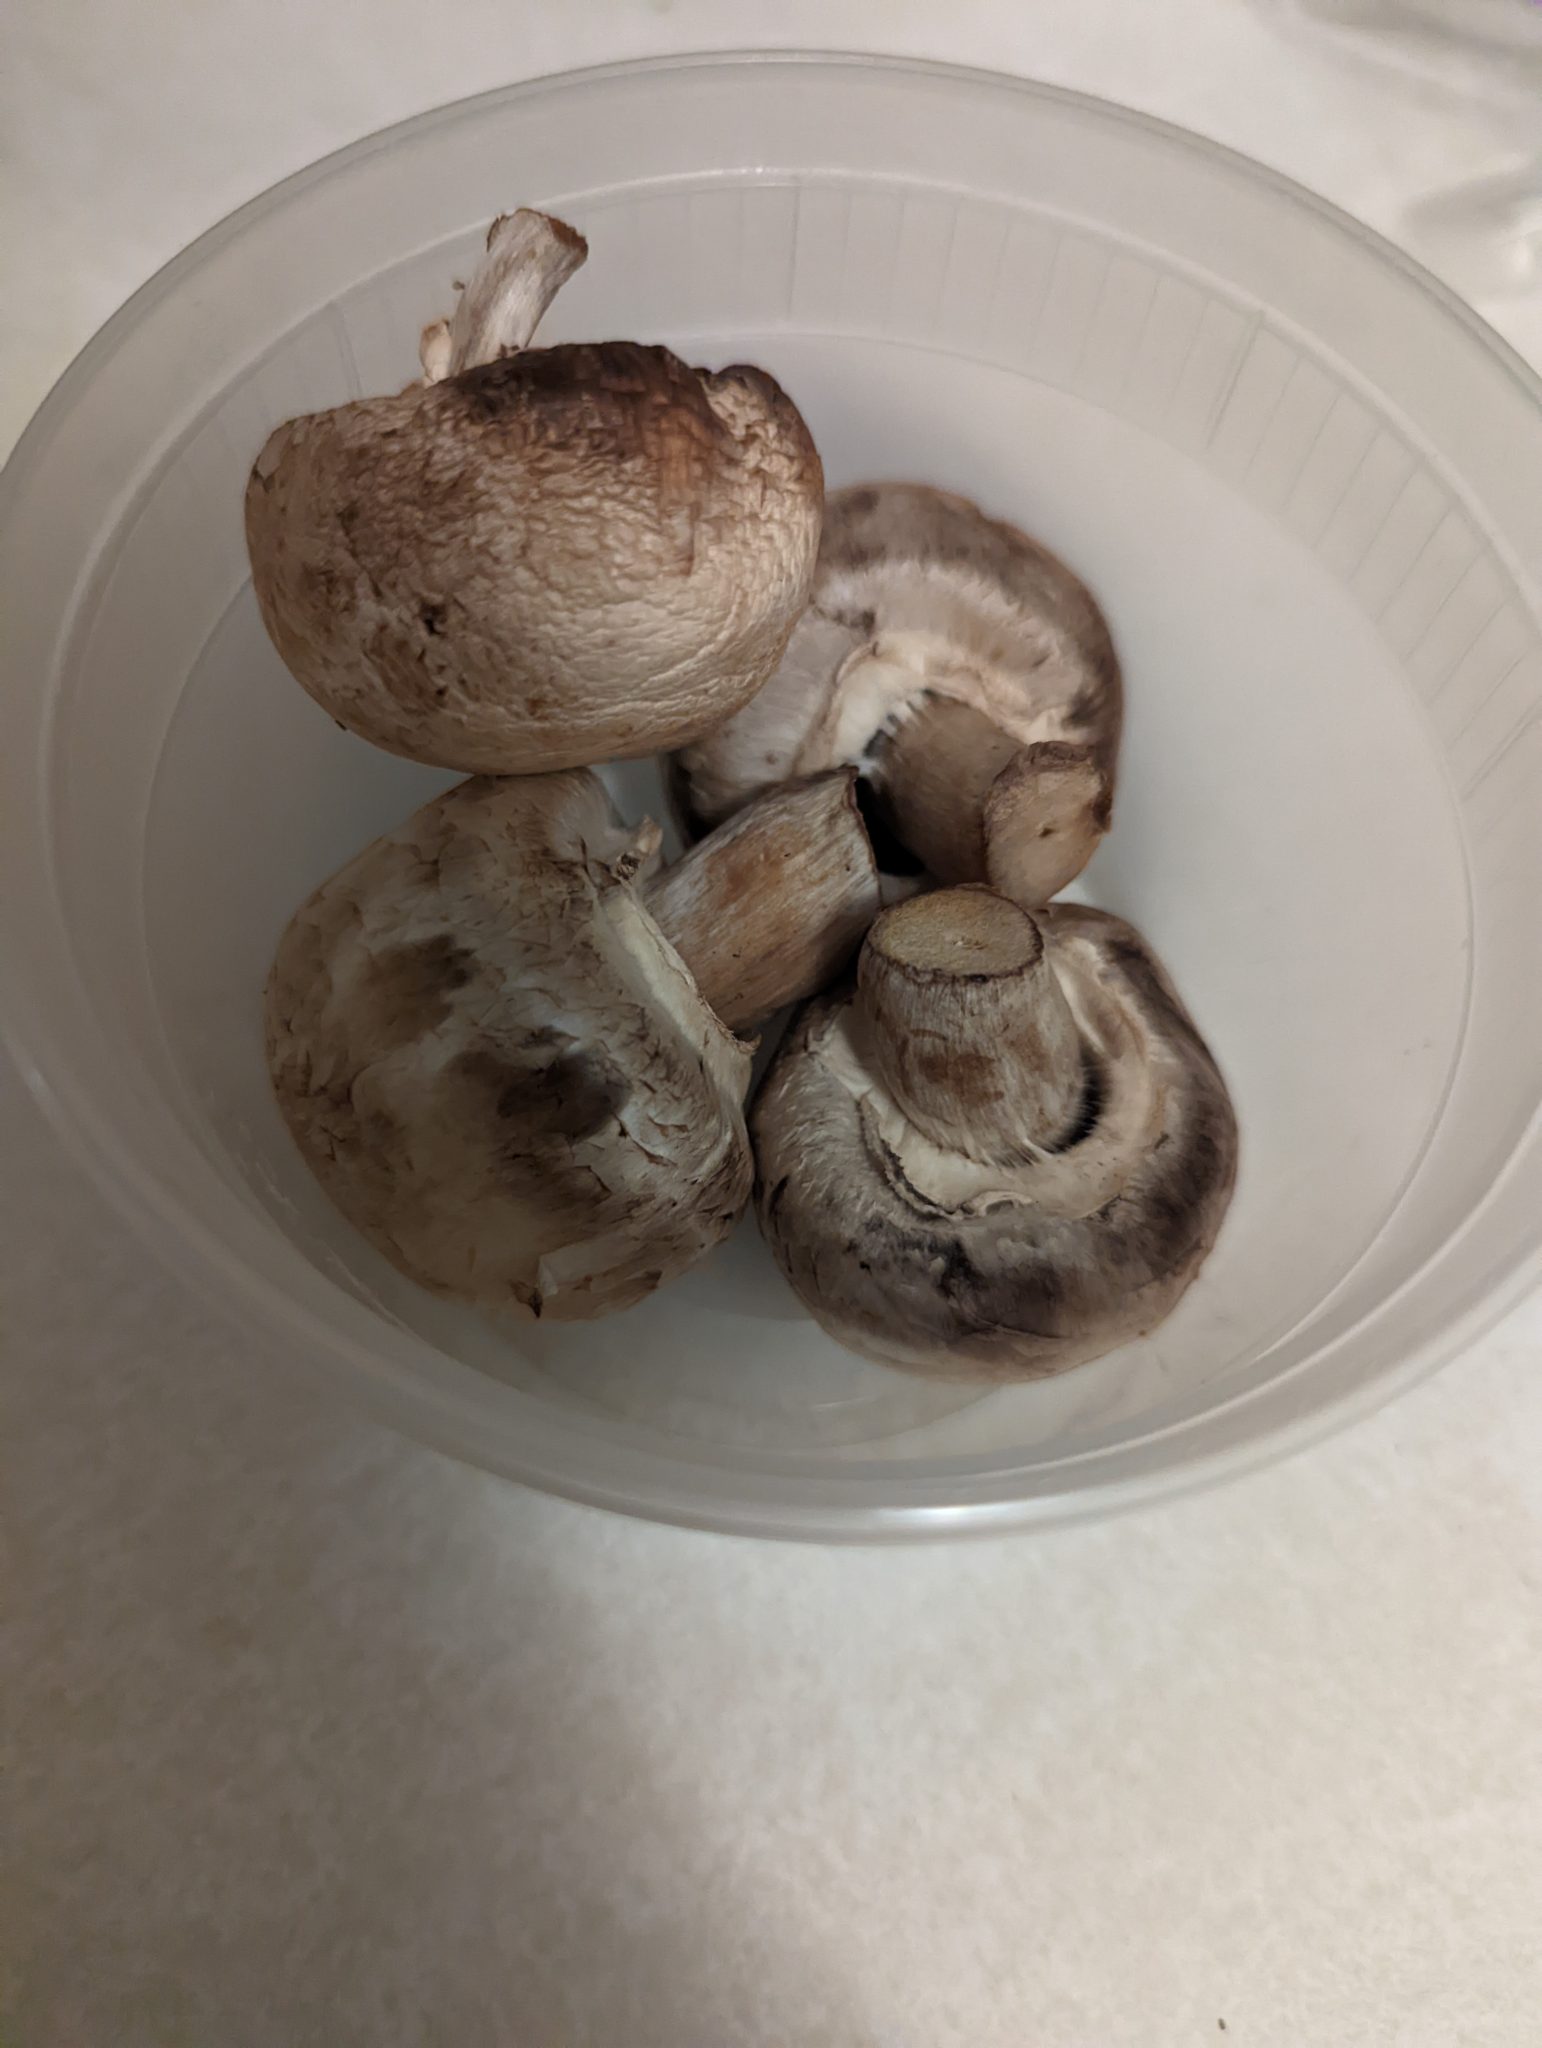 Four mushrooms in a plastic container